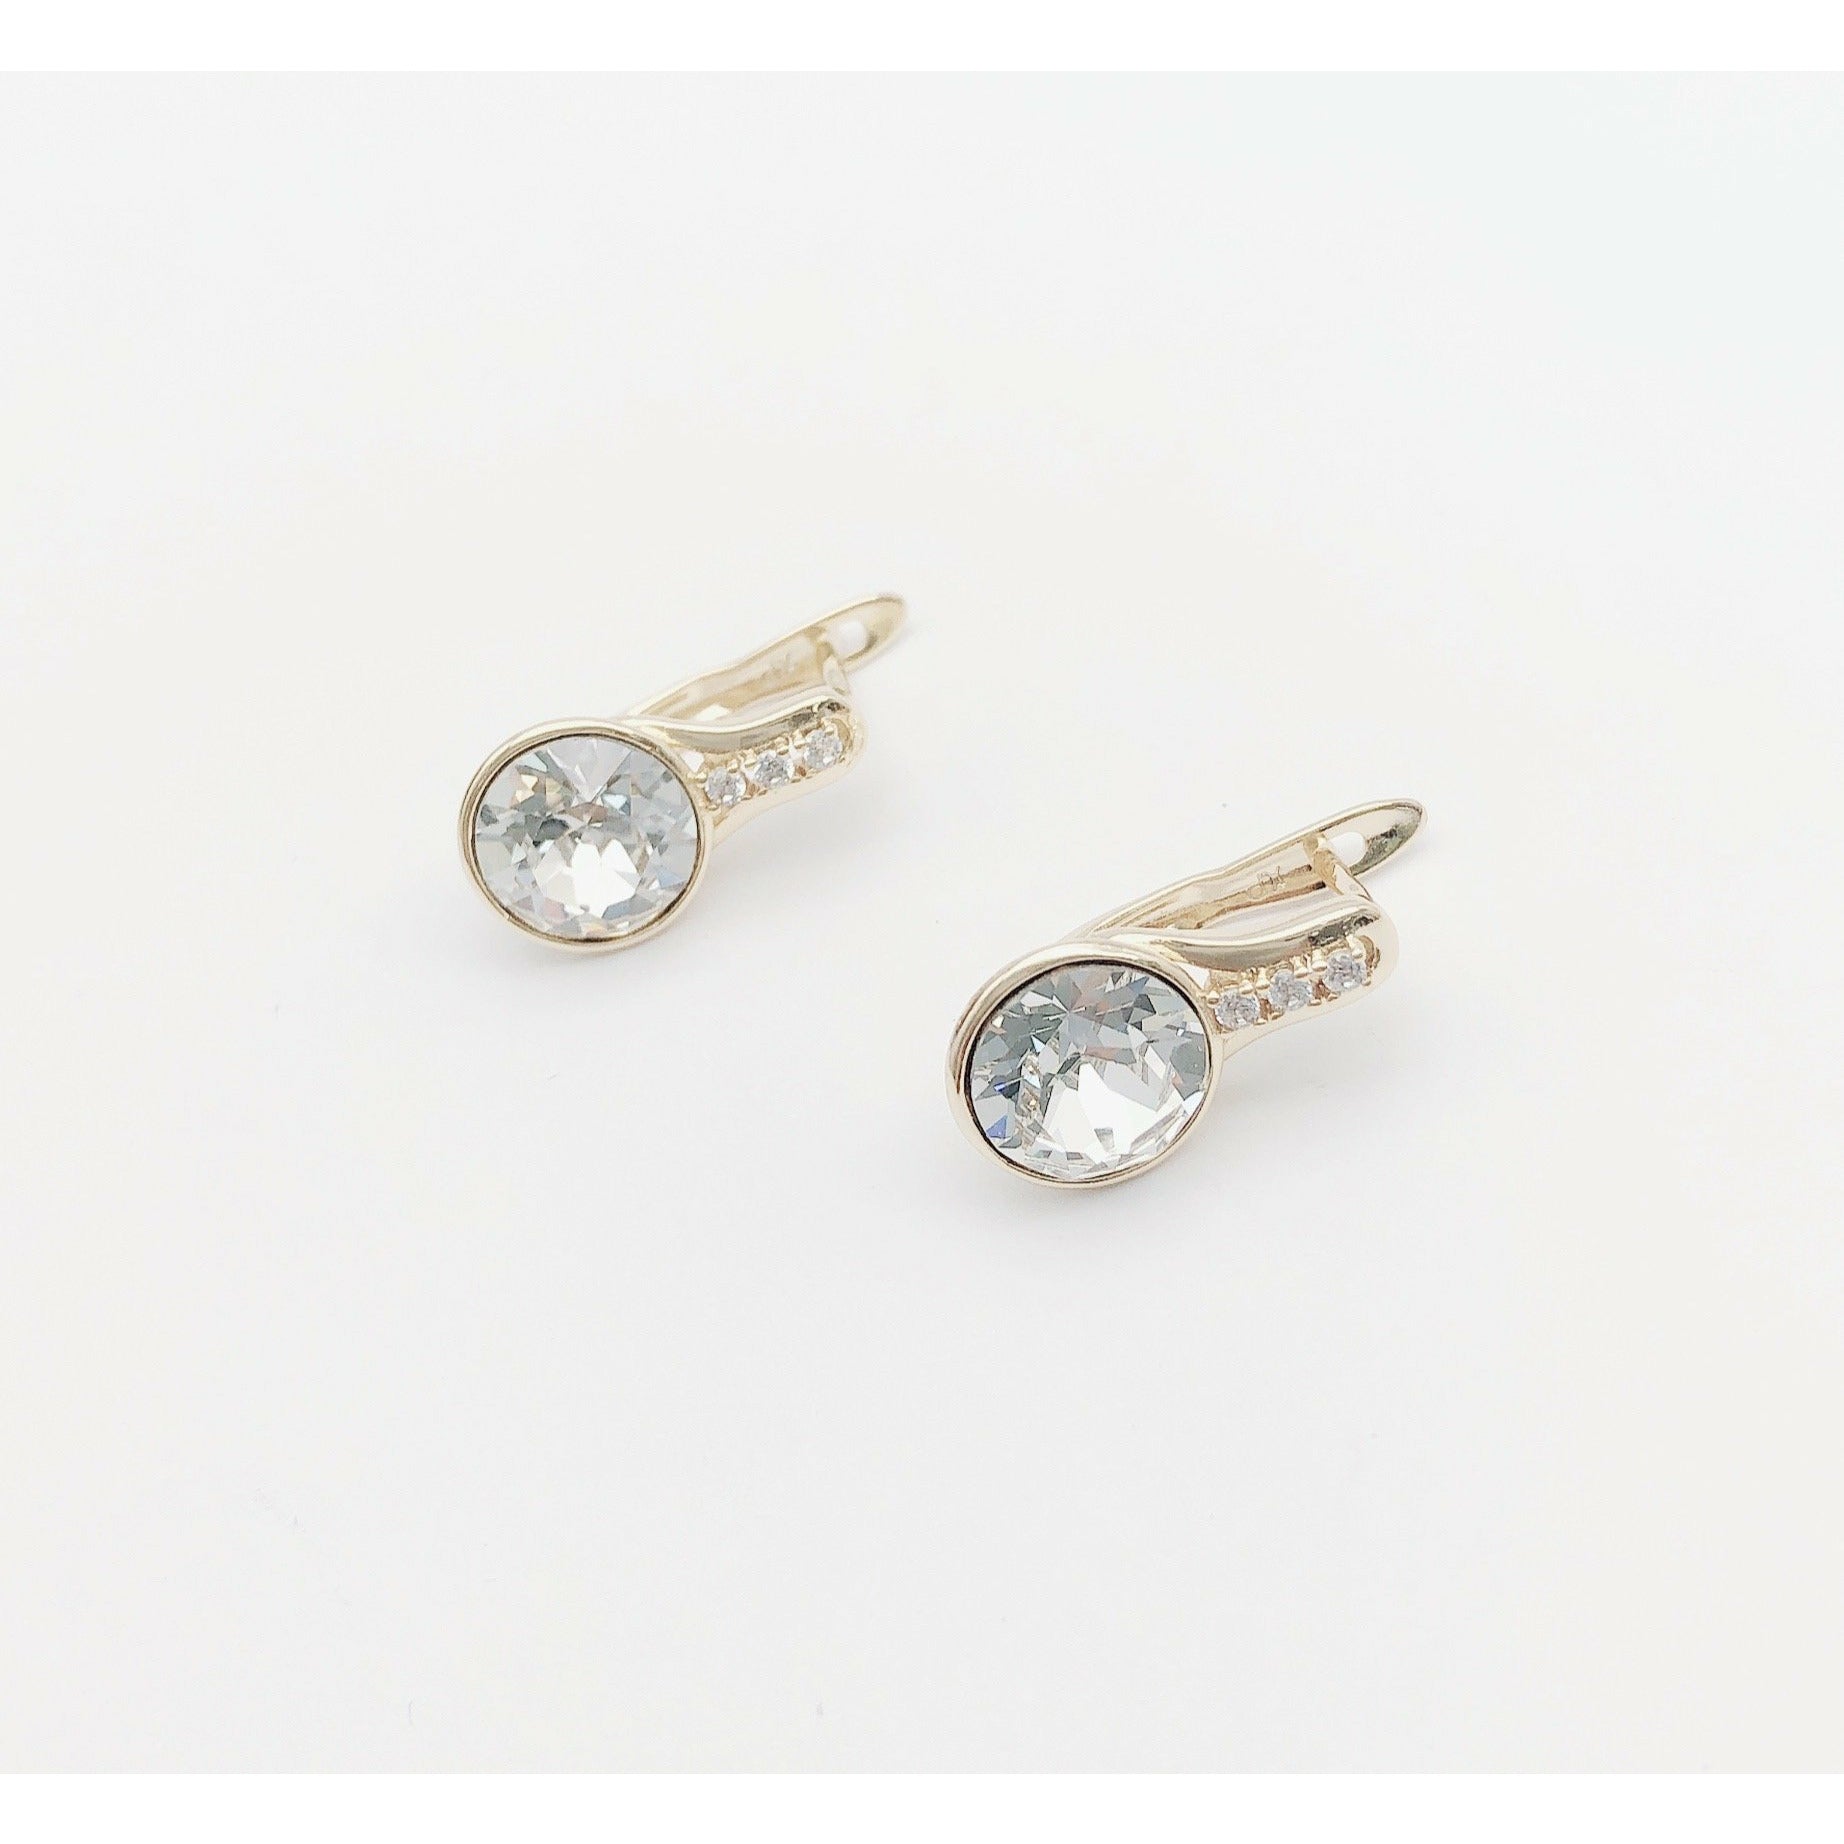 Buy Ruby Diamond Pearl Bridal Earrings Online for Women | Rose